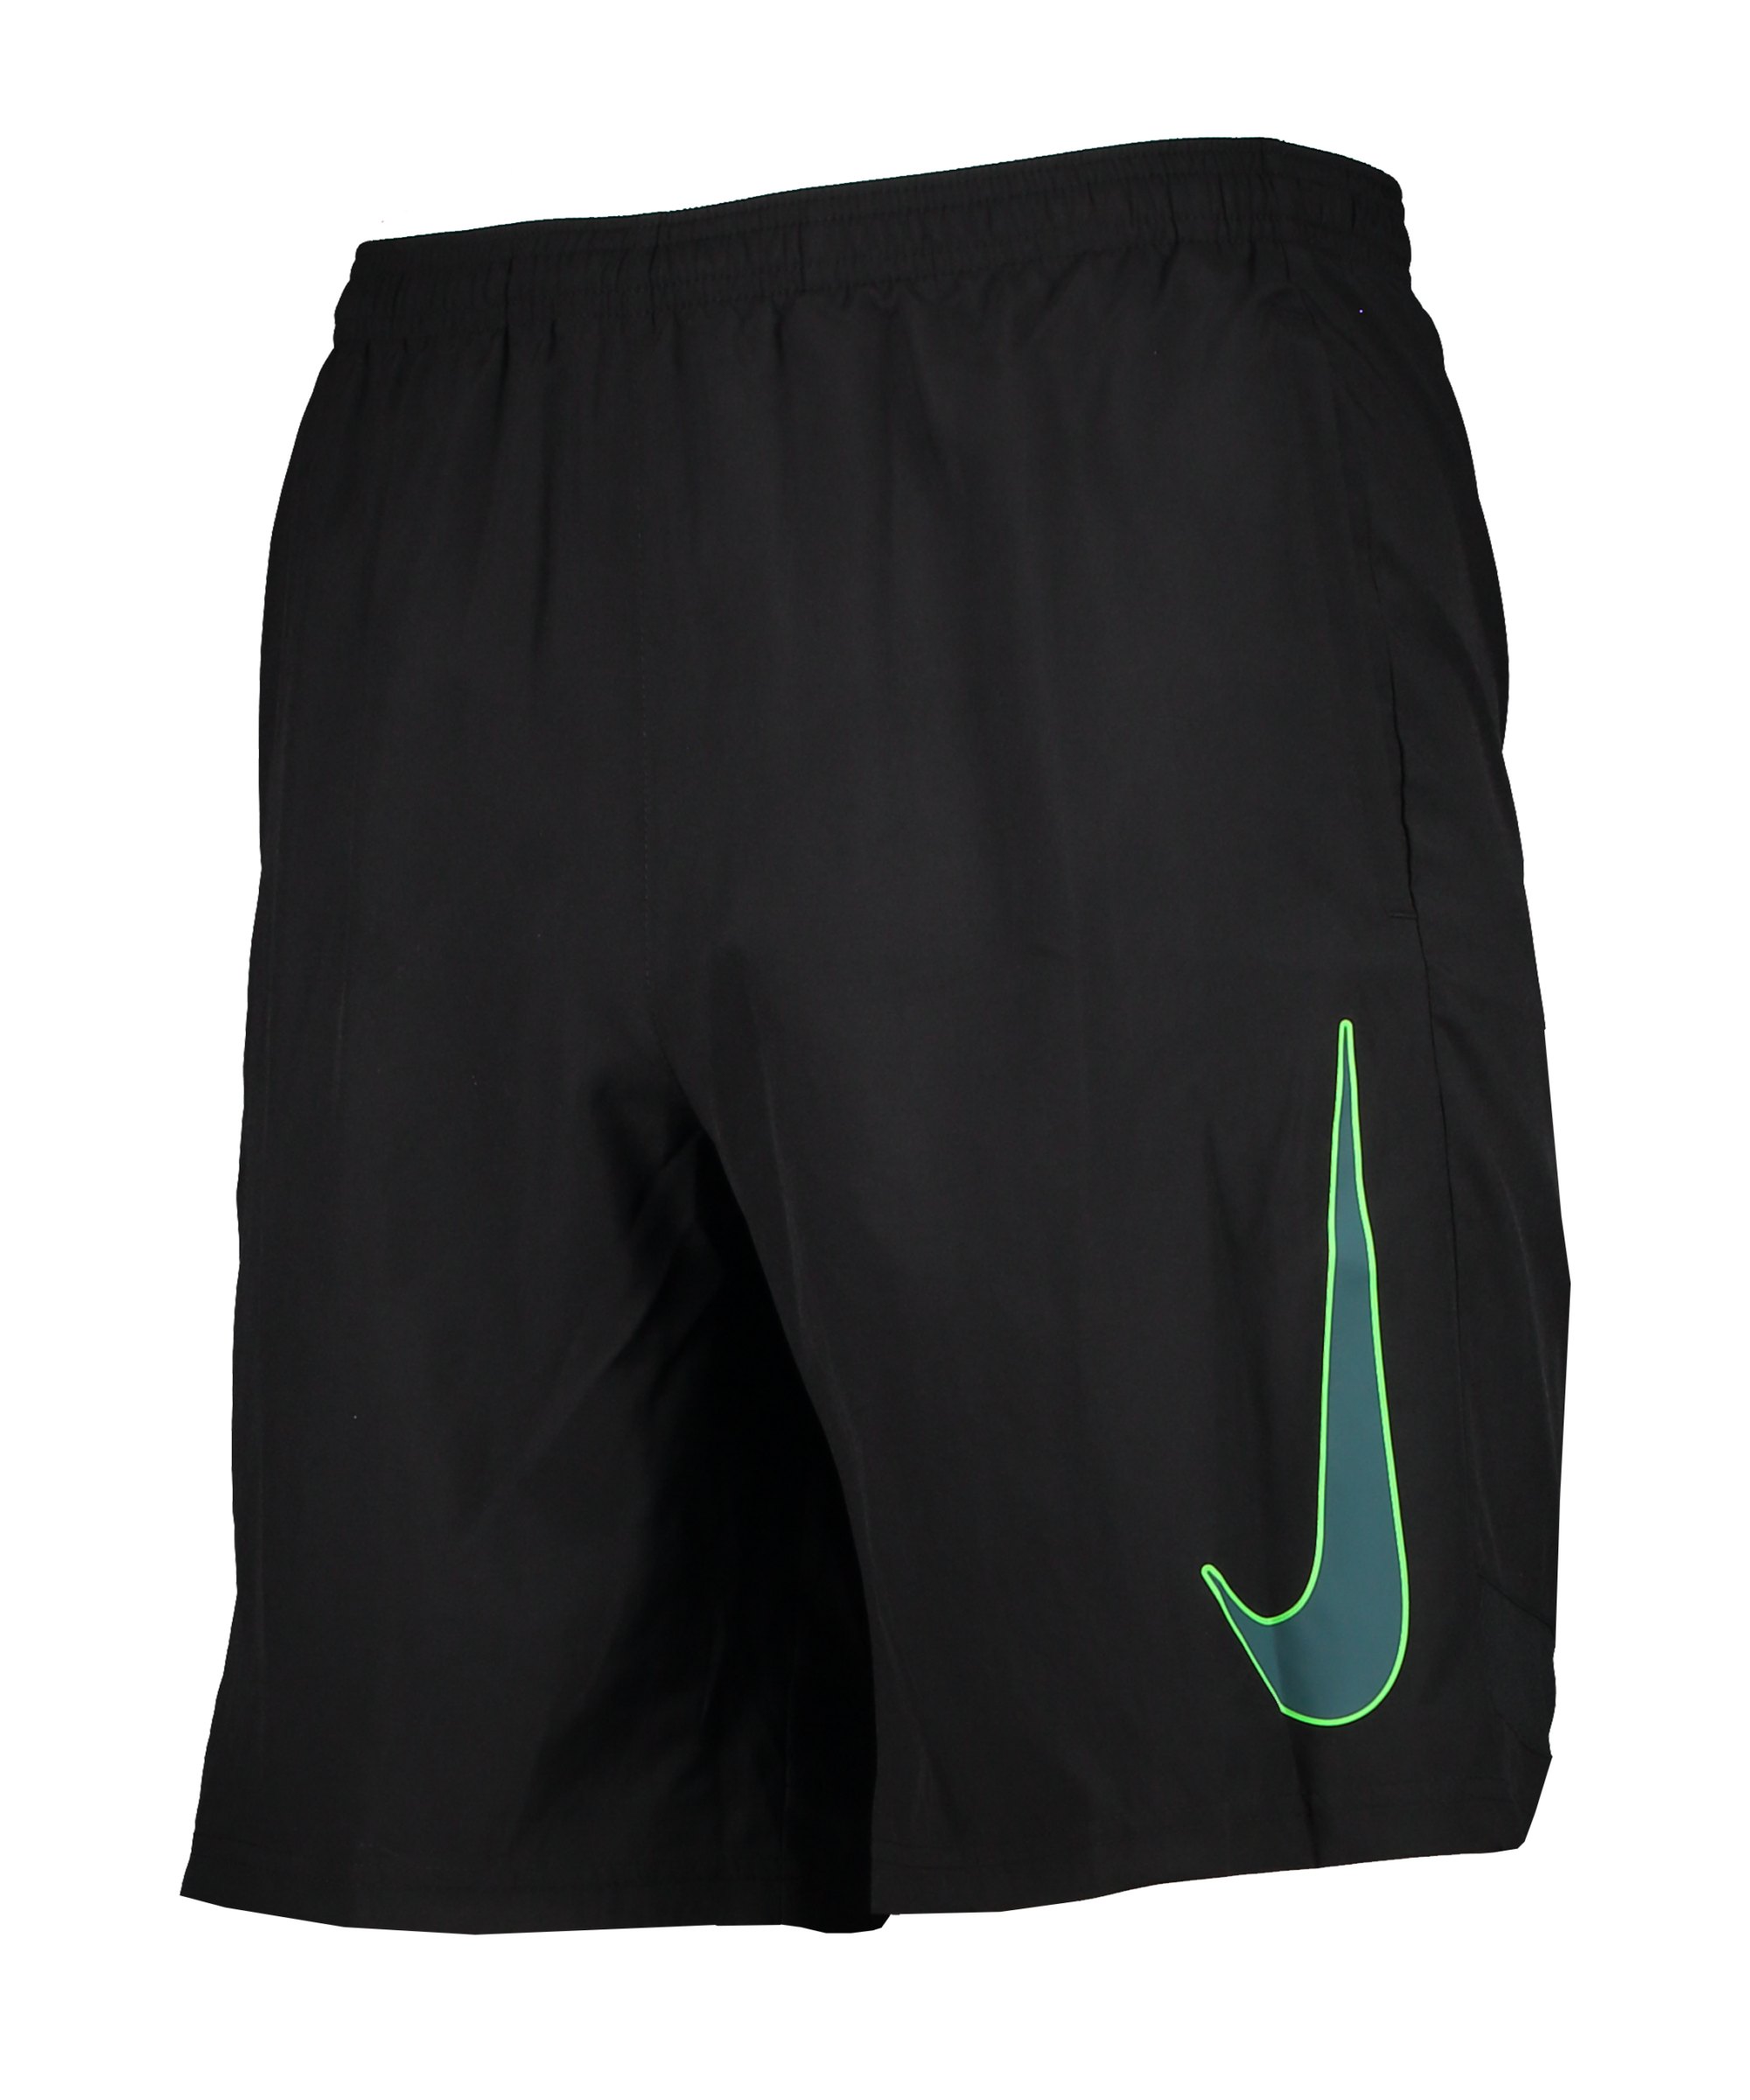 Nike Academy Short Schwarz Grün F011 - schwarz